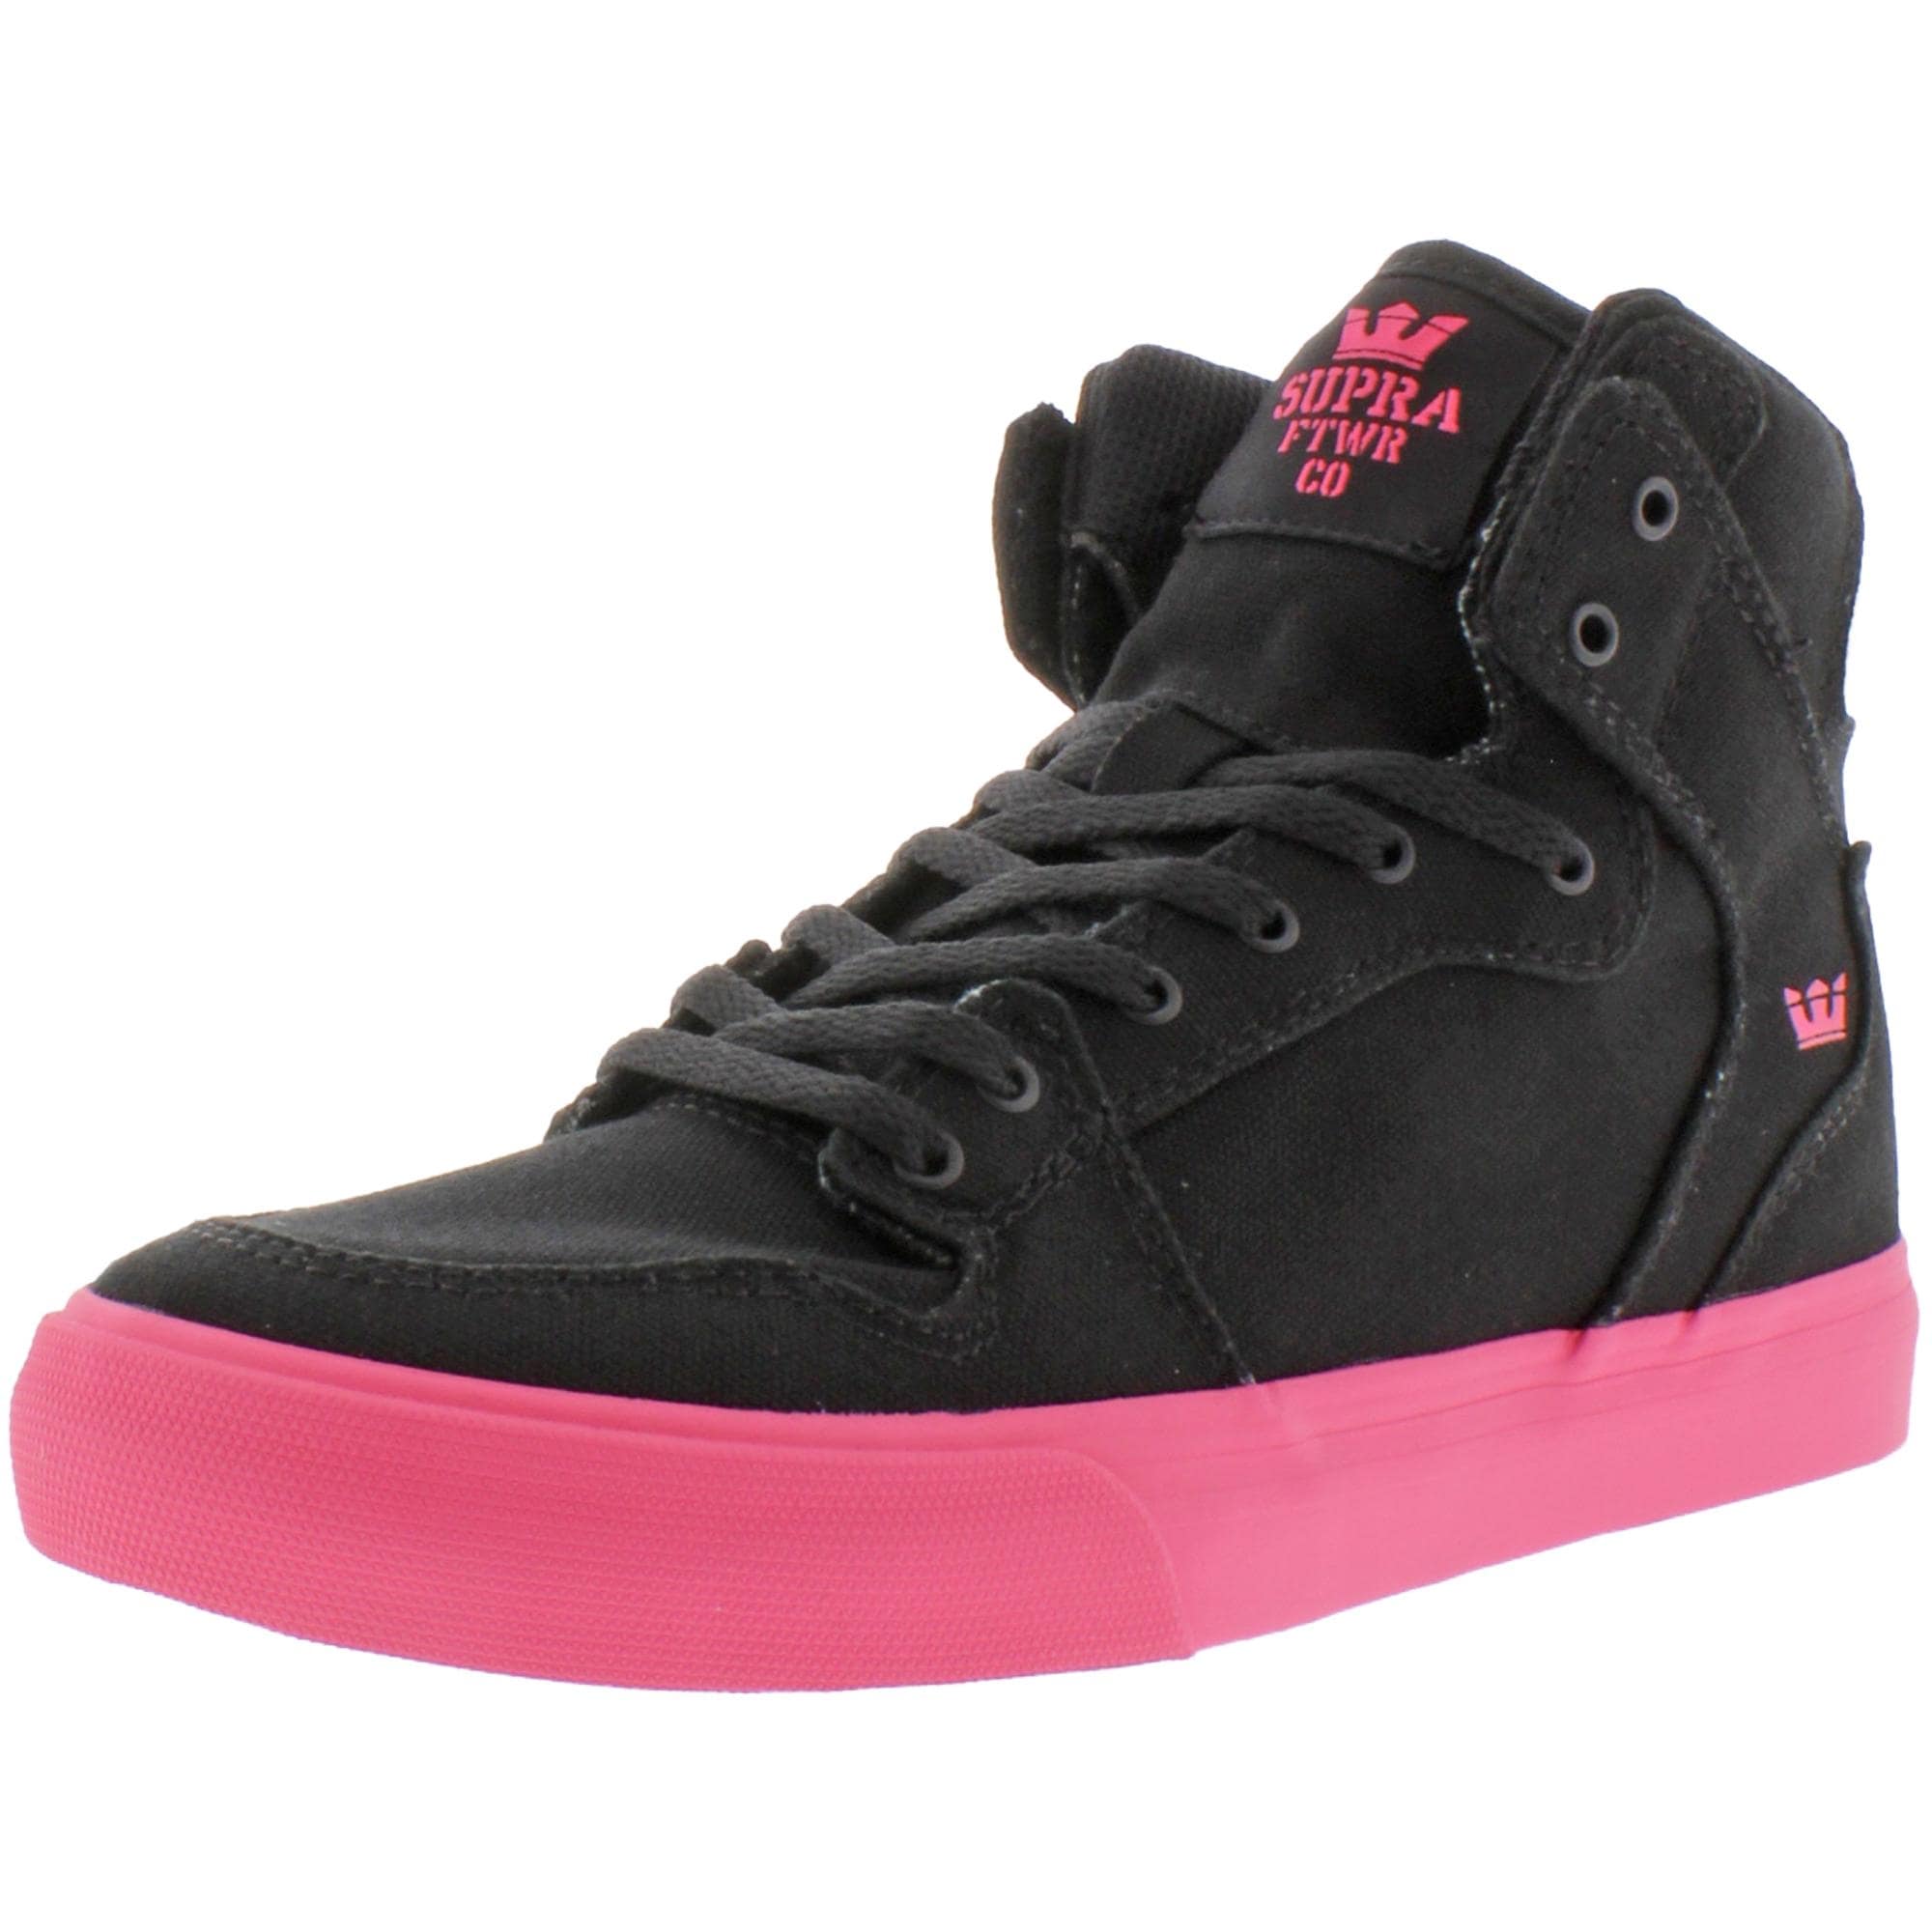 Supra Girls Vaider Skateboarding Shoes Canvas High Top Black Hot Pink Overstock 3477